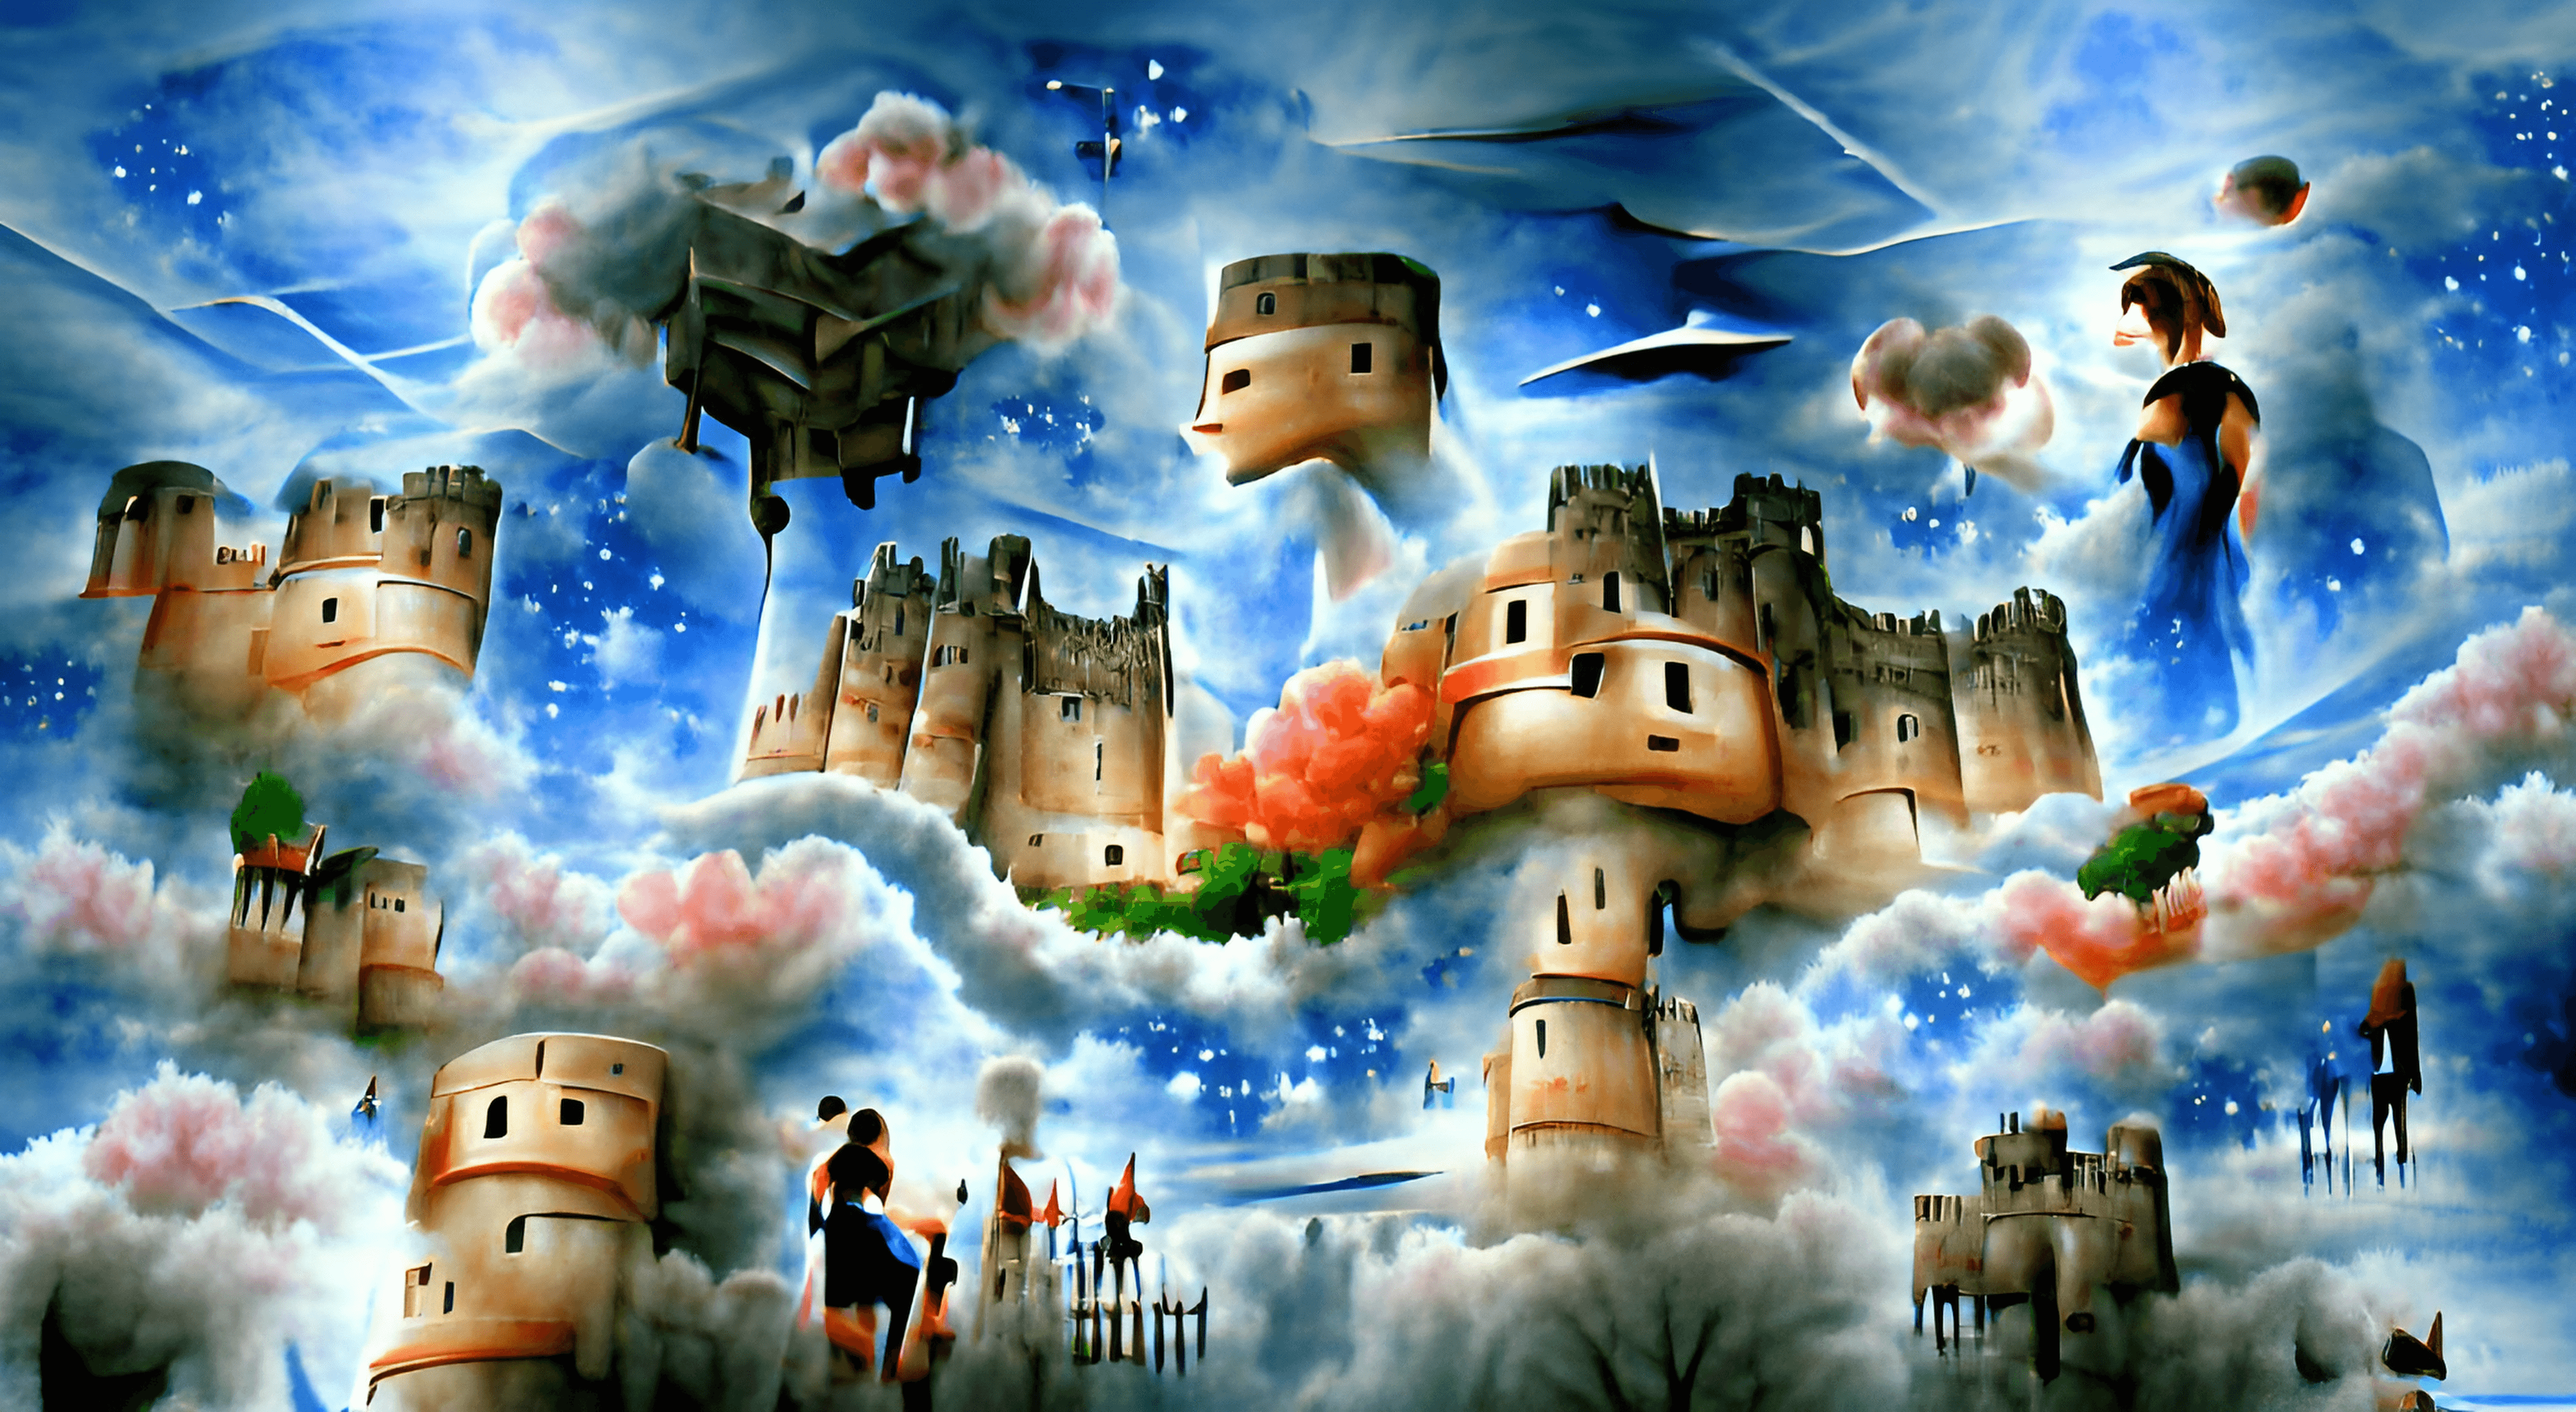 Sky Castles